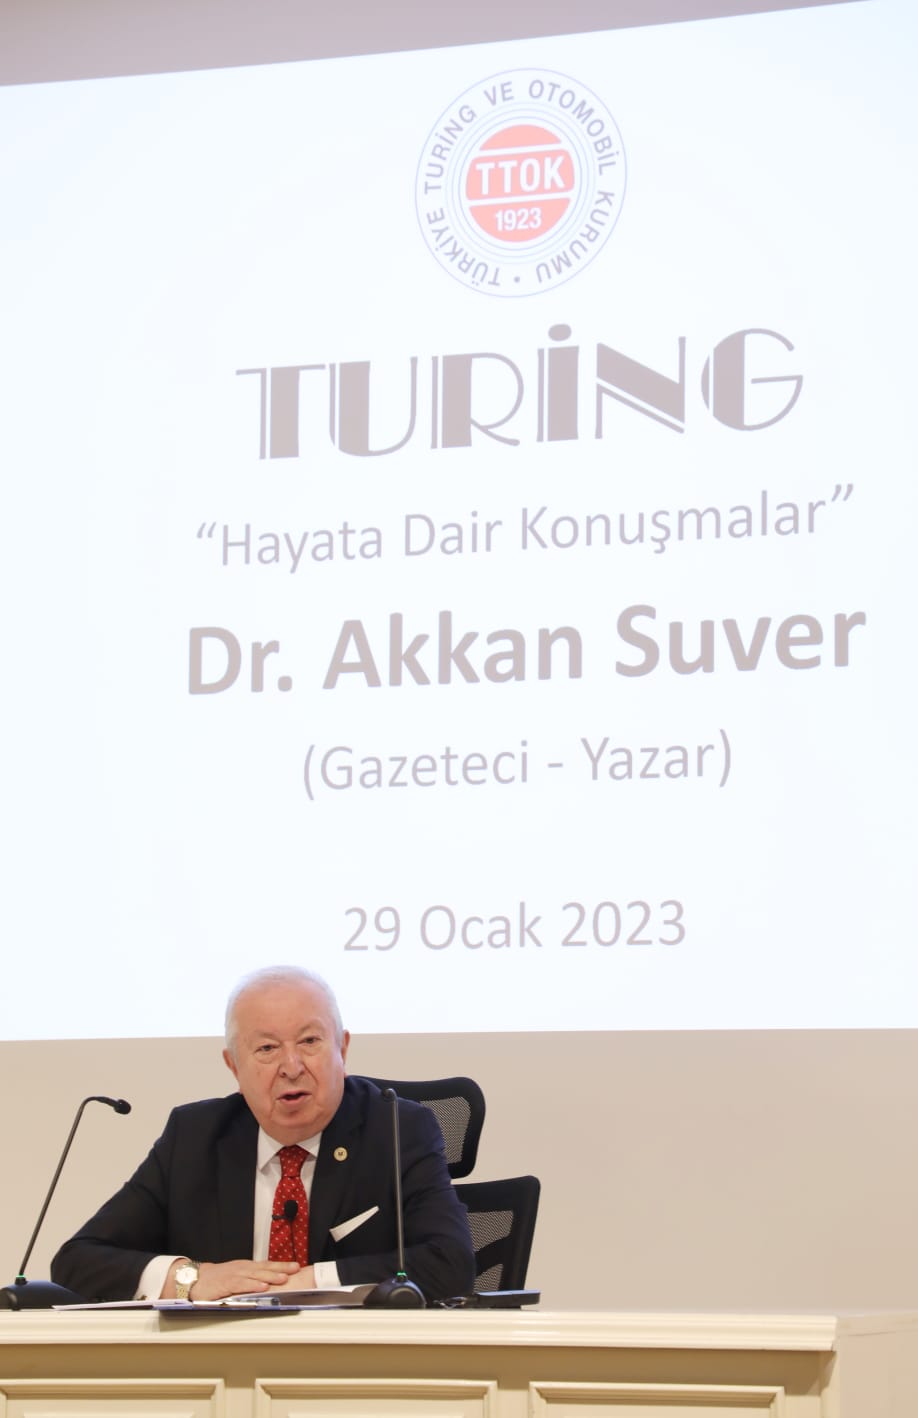 Dr. Akkan Suver Türkiye Turing Otomobil Kurumunda Konfe